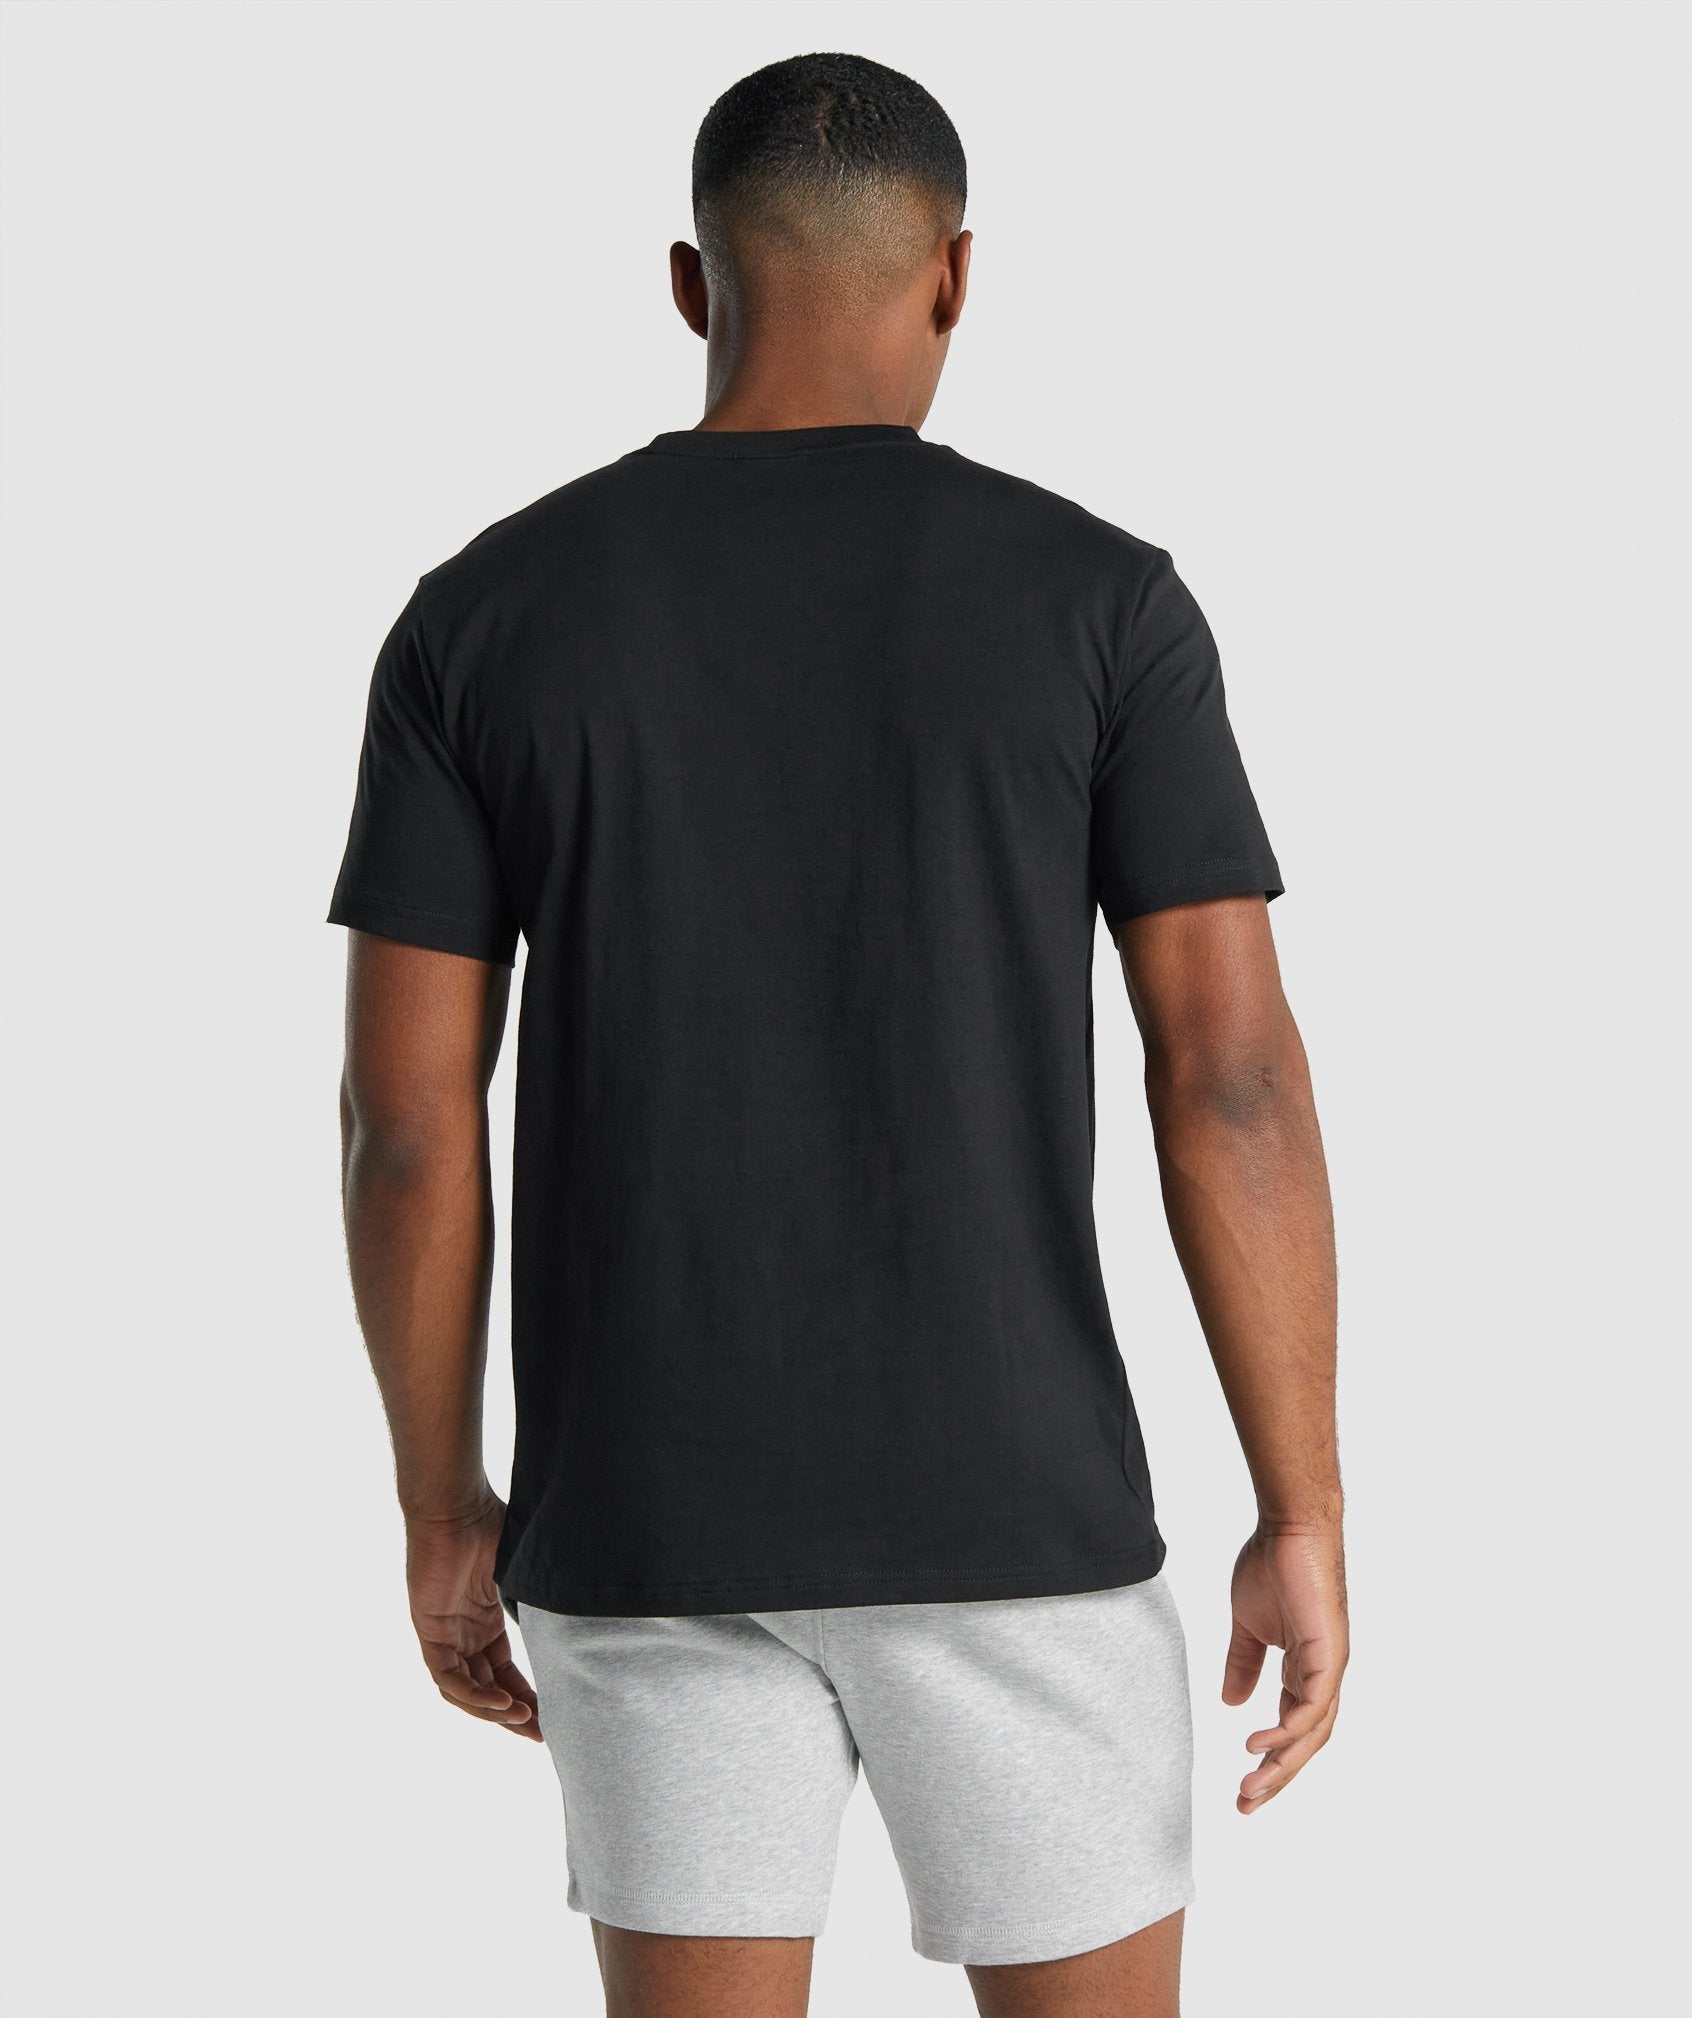 Gymshark Arrival Long Sleeve T-Shirt - Black/Silhouette Grey Marl